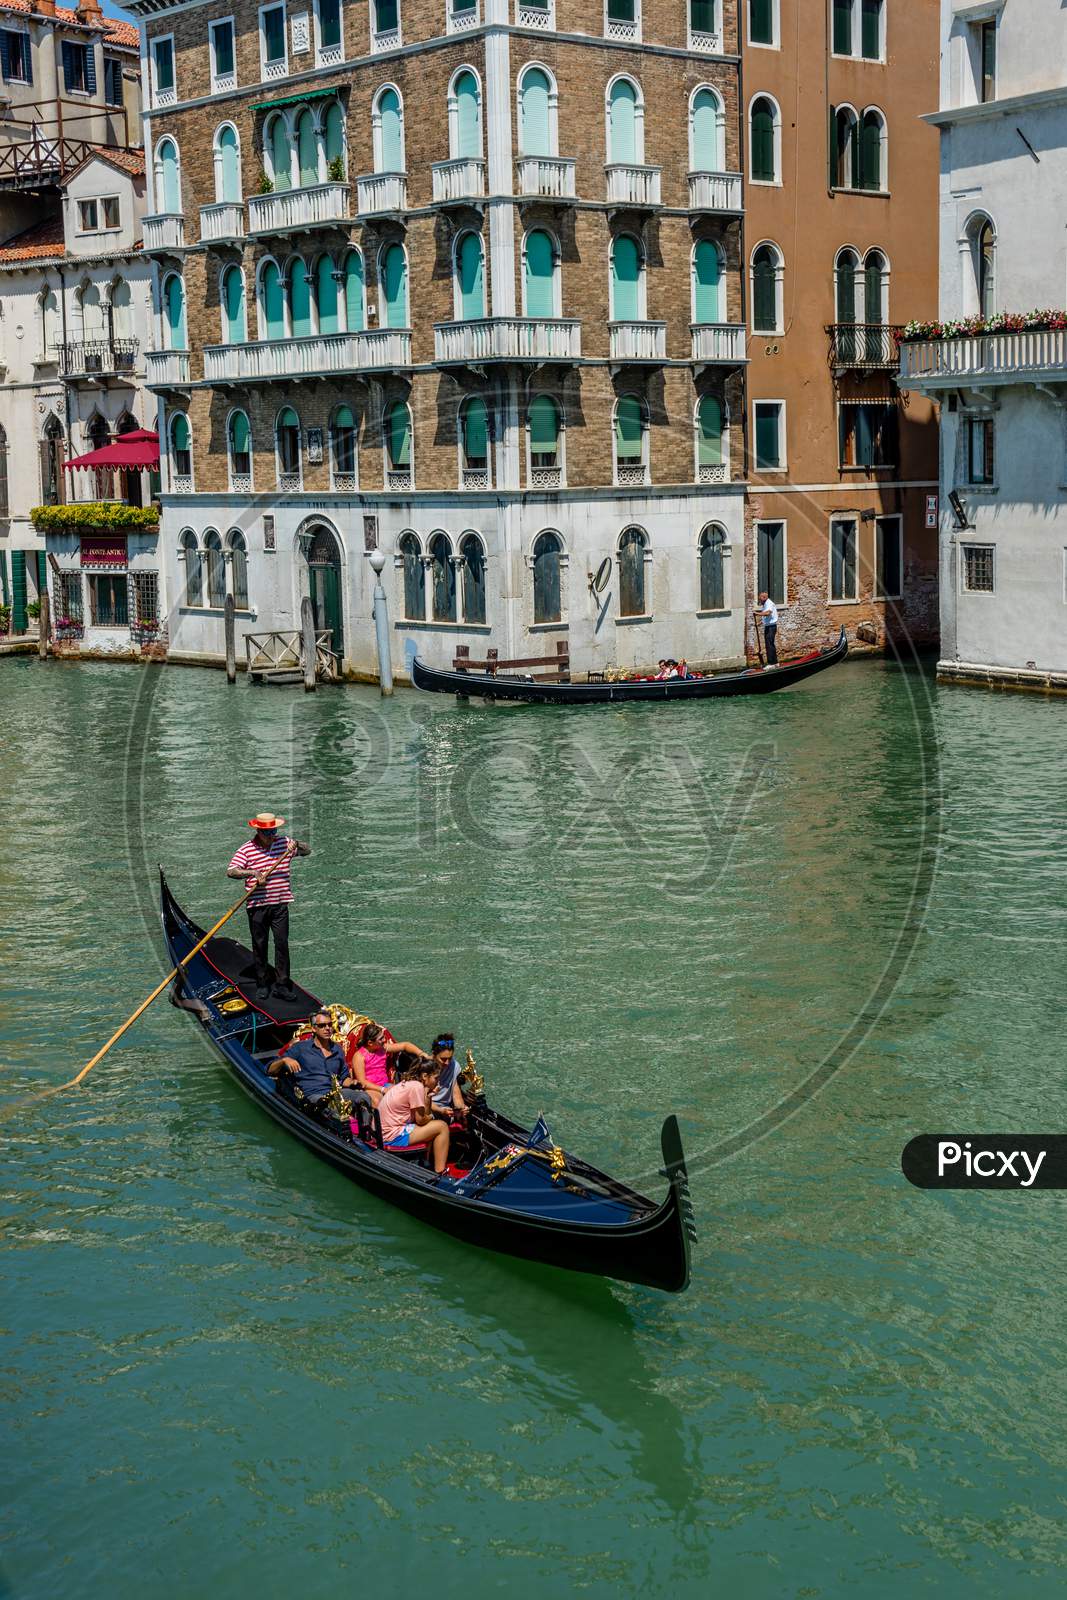 Venice, Italy - 01 July 2018: The Gondolas On A Grand Canal In Venice, Italy